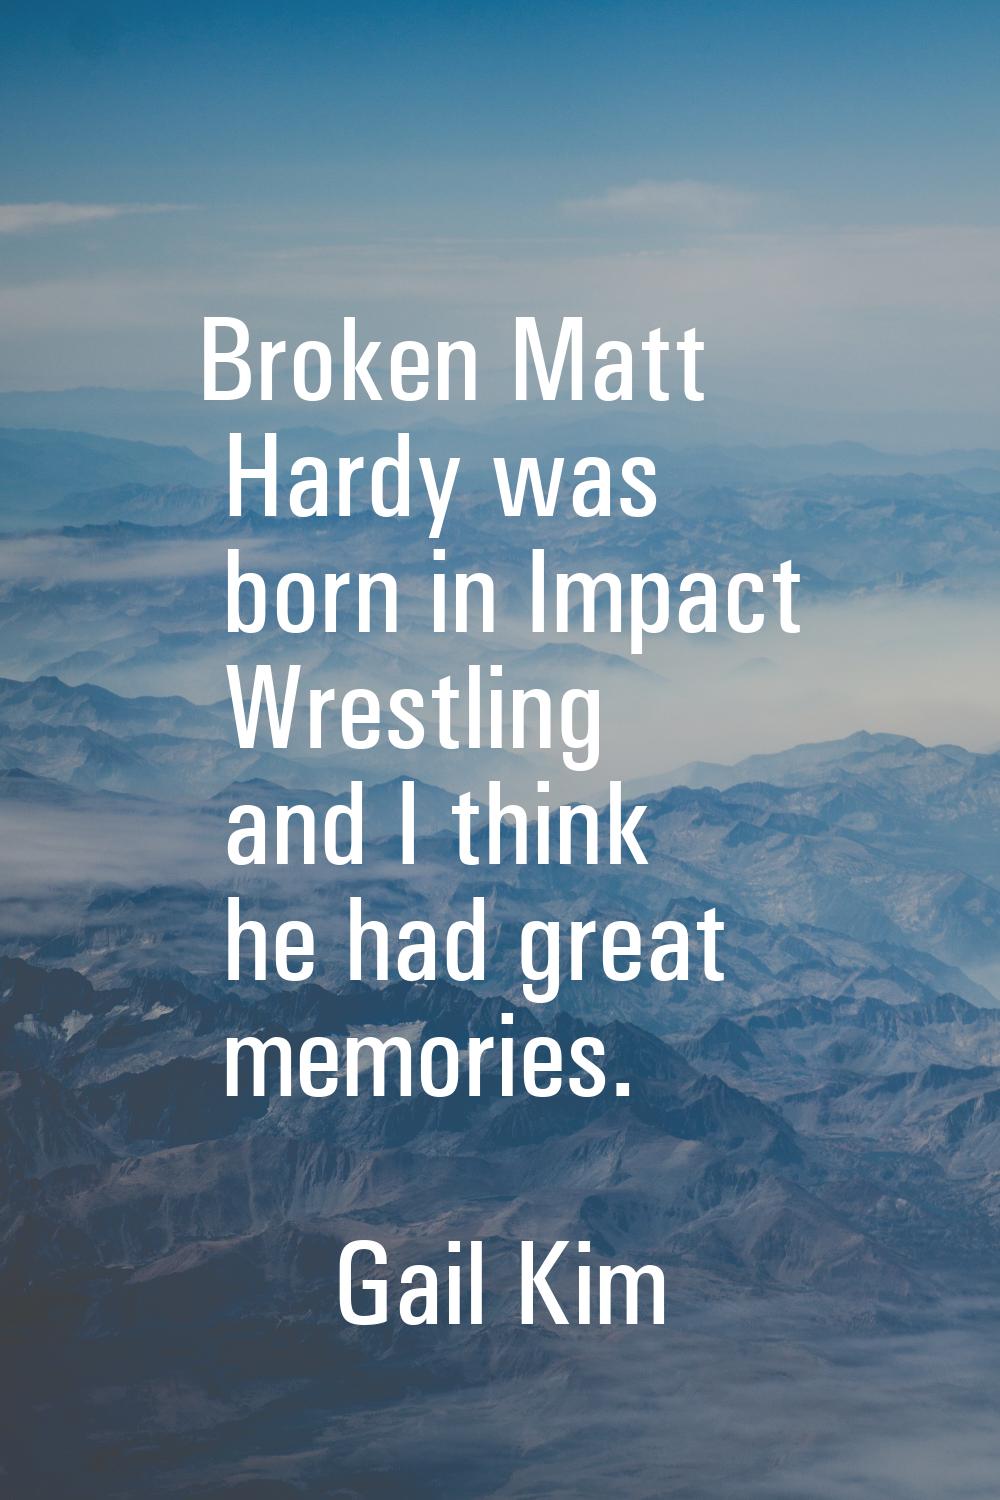 Broken Matt Hardy was born in Impact Wrestling and I think he had great memories.